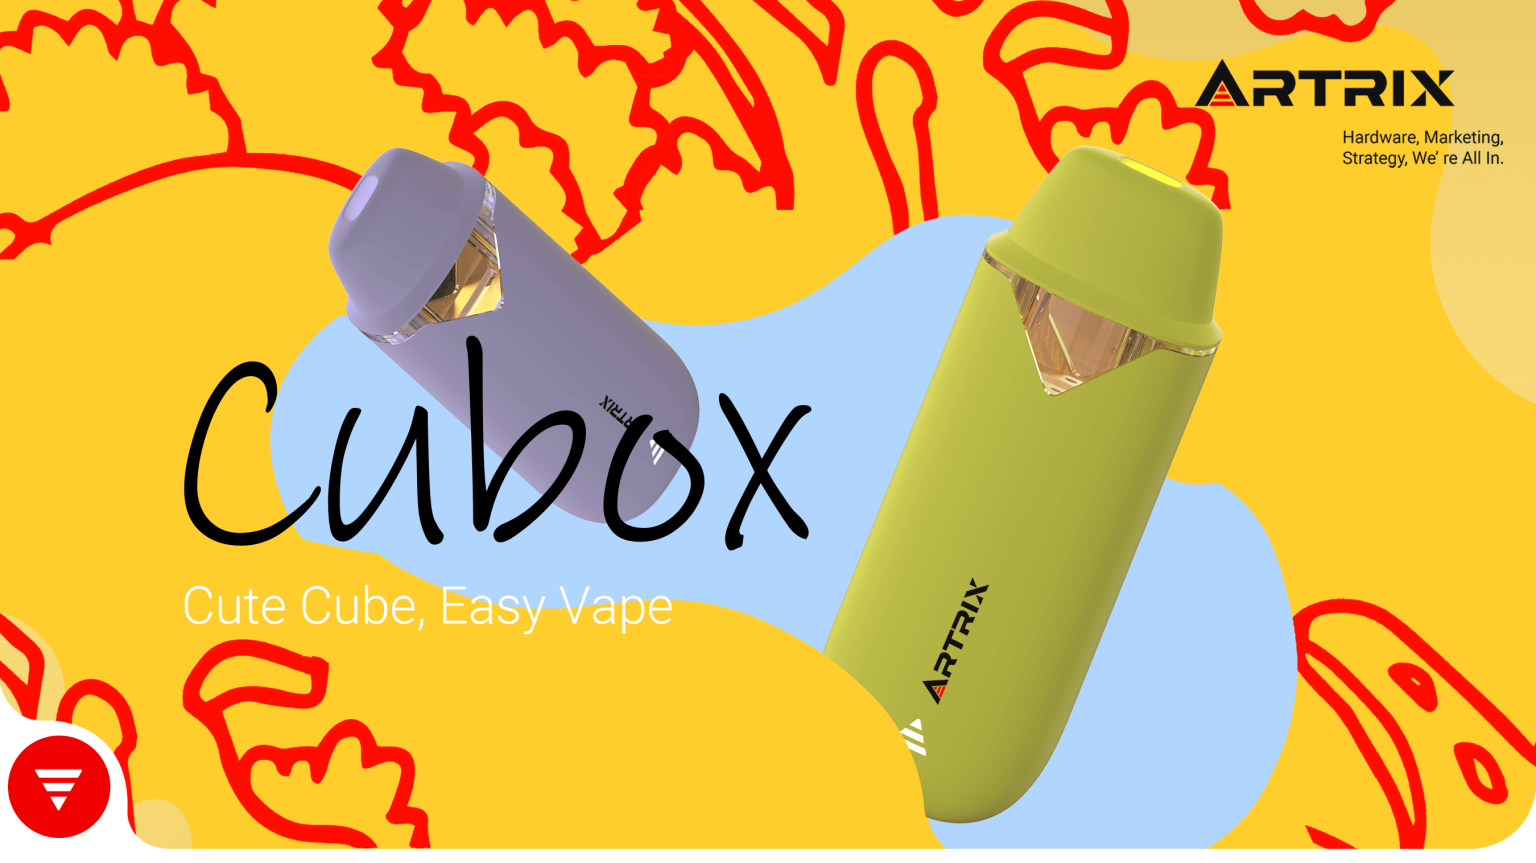 Artrix Cubox disposable cannabis vape